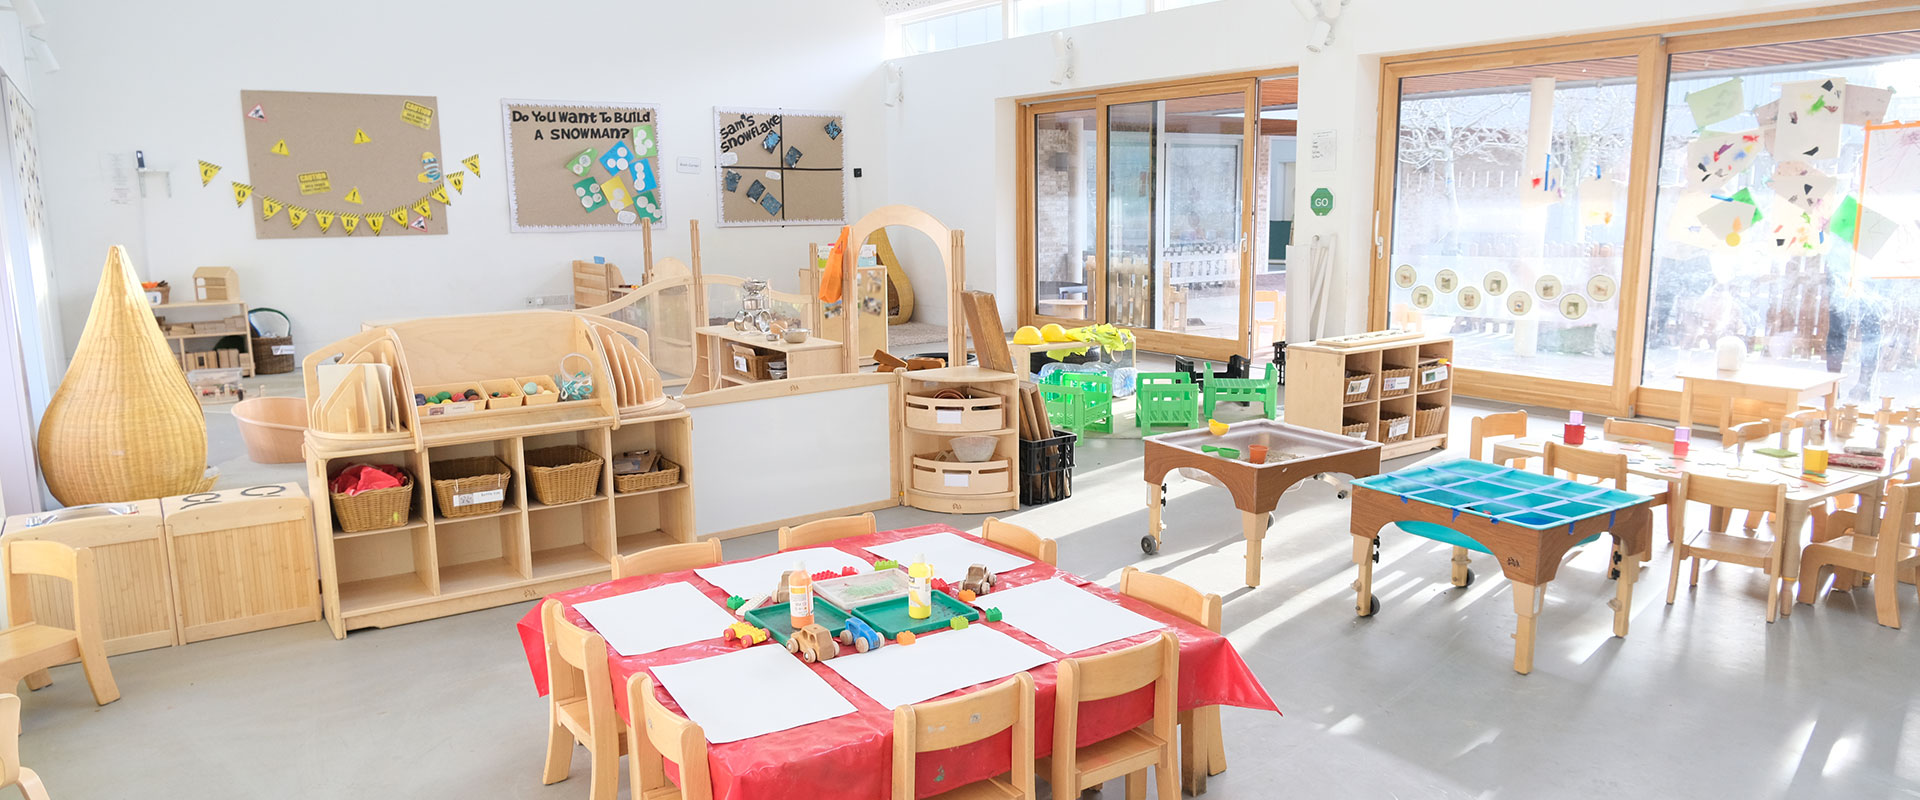 Bright Horizons Eddington Day Nursery and Preschool 2 - 3 Room